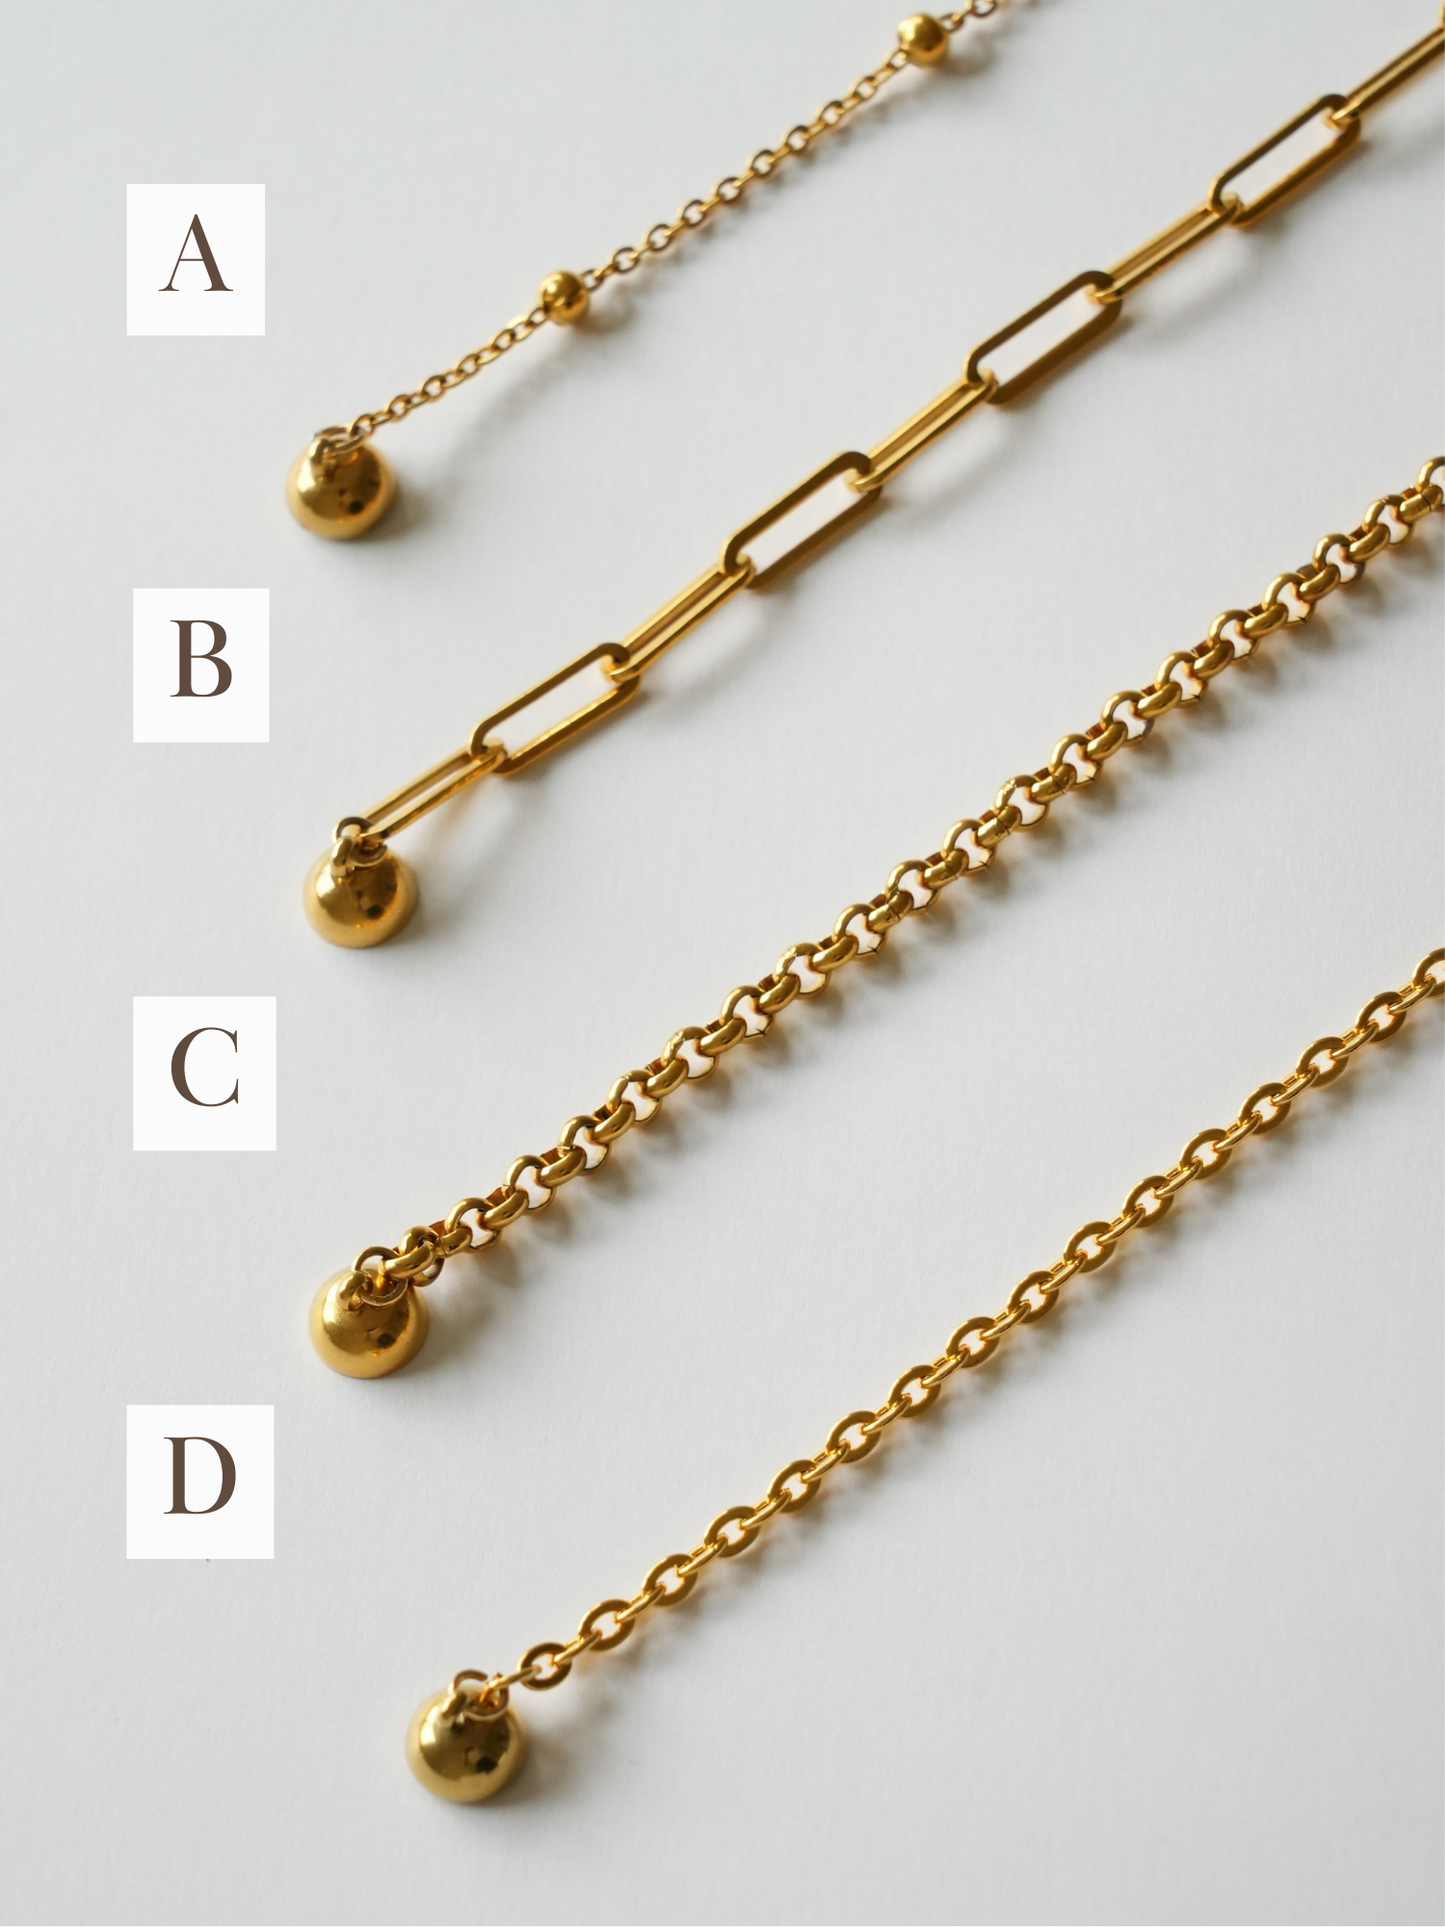 2way choice necklace / 316L(金属アレルギー対応)